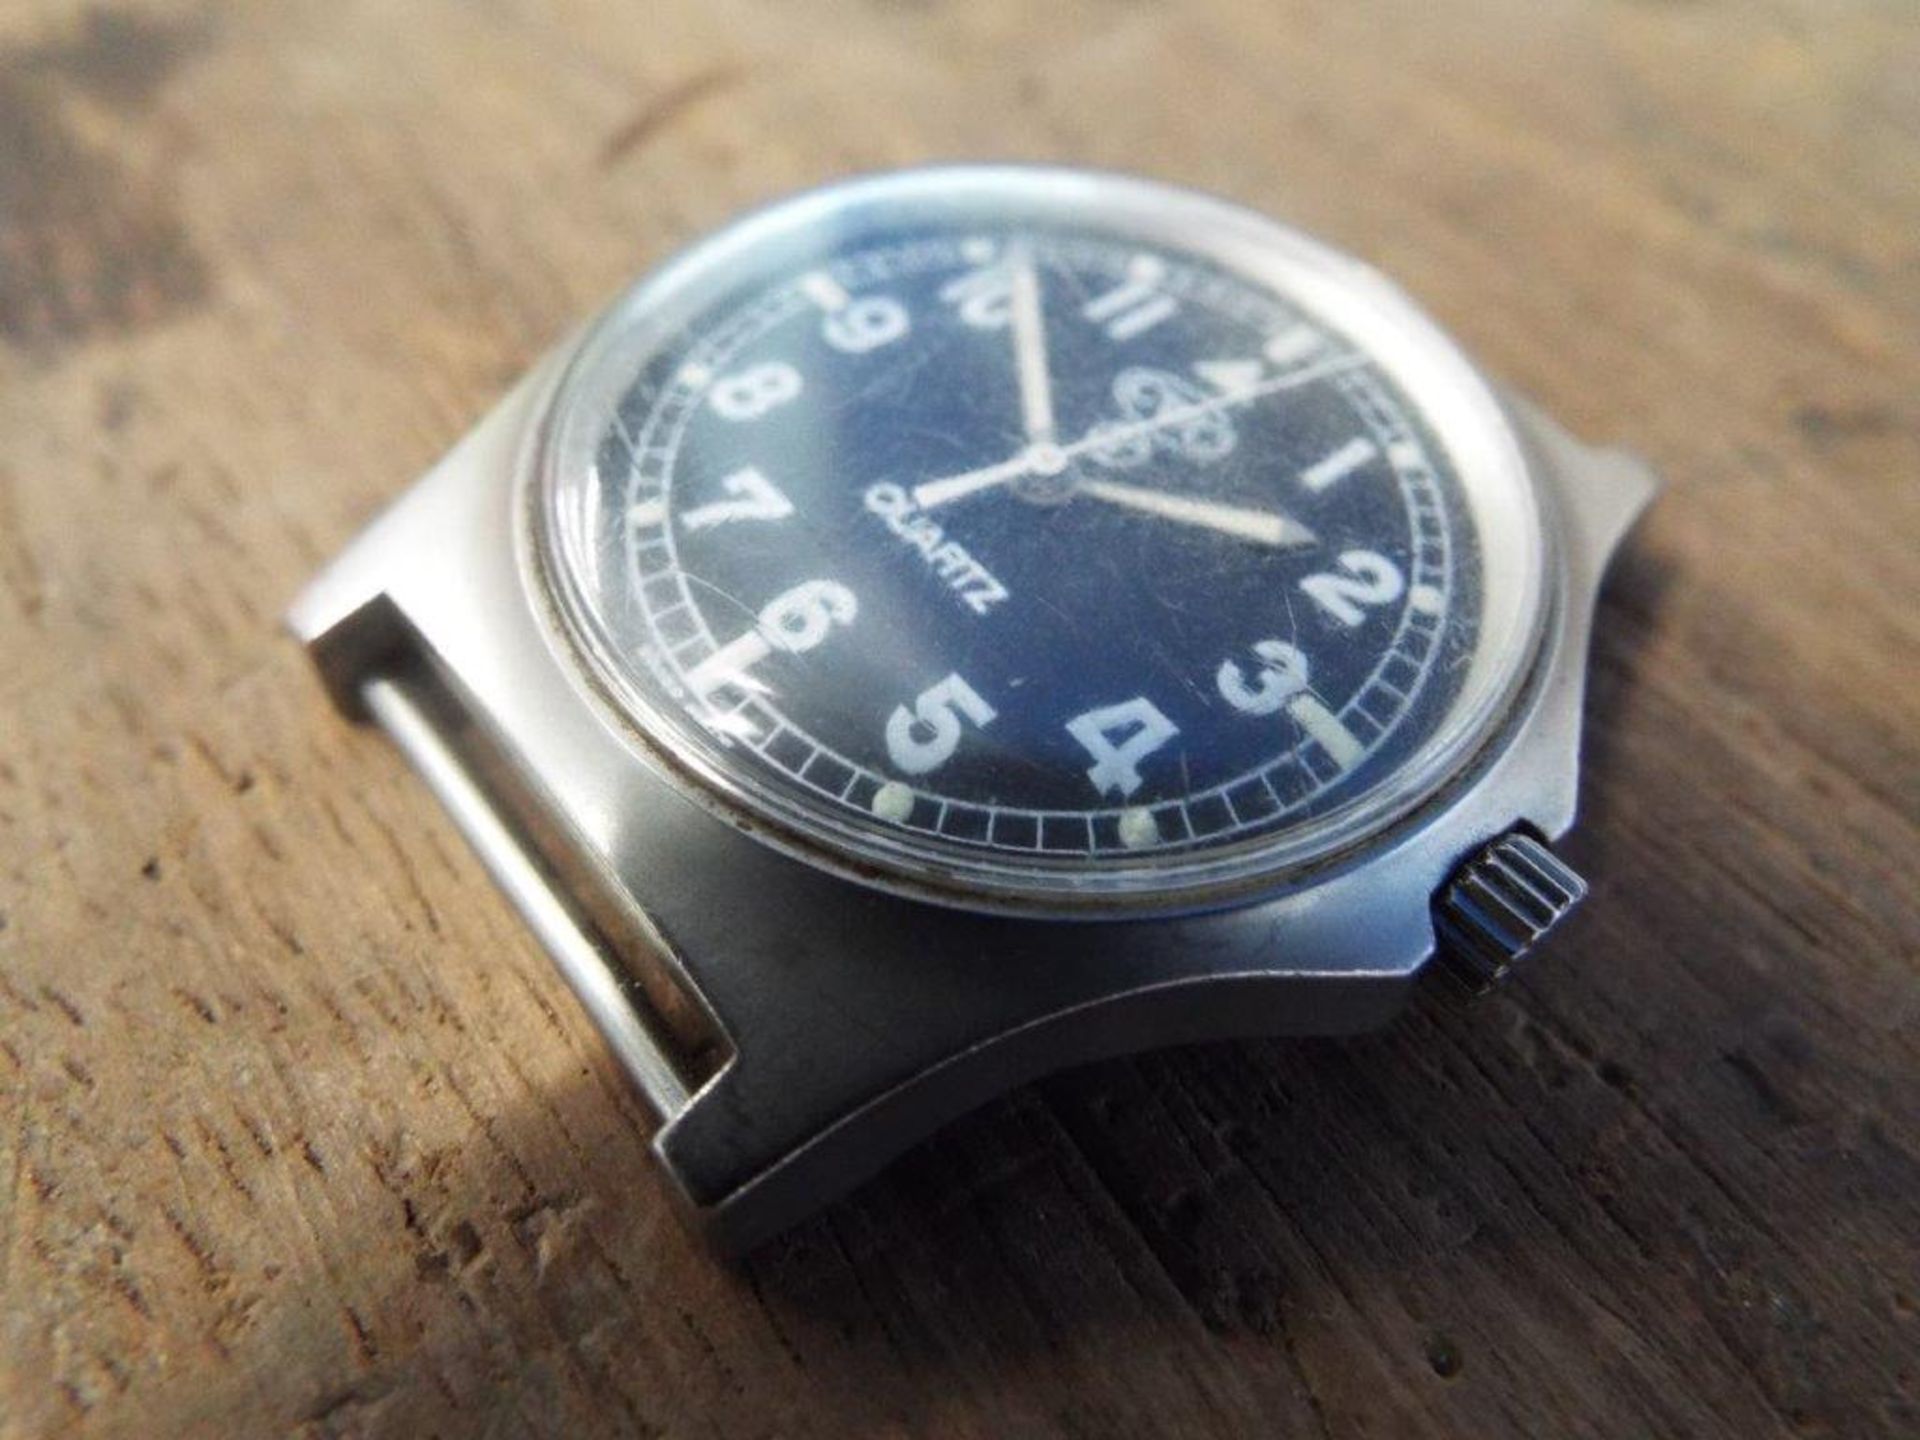 Genuine British Army CWC Quartz Wrist Watch - Image 3 of 5